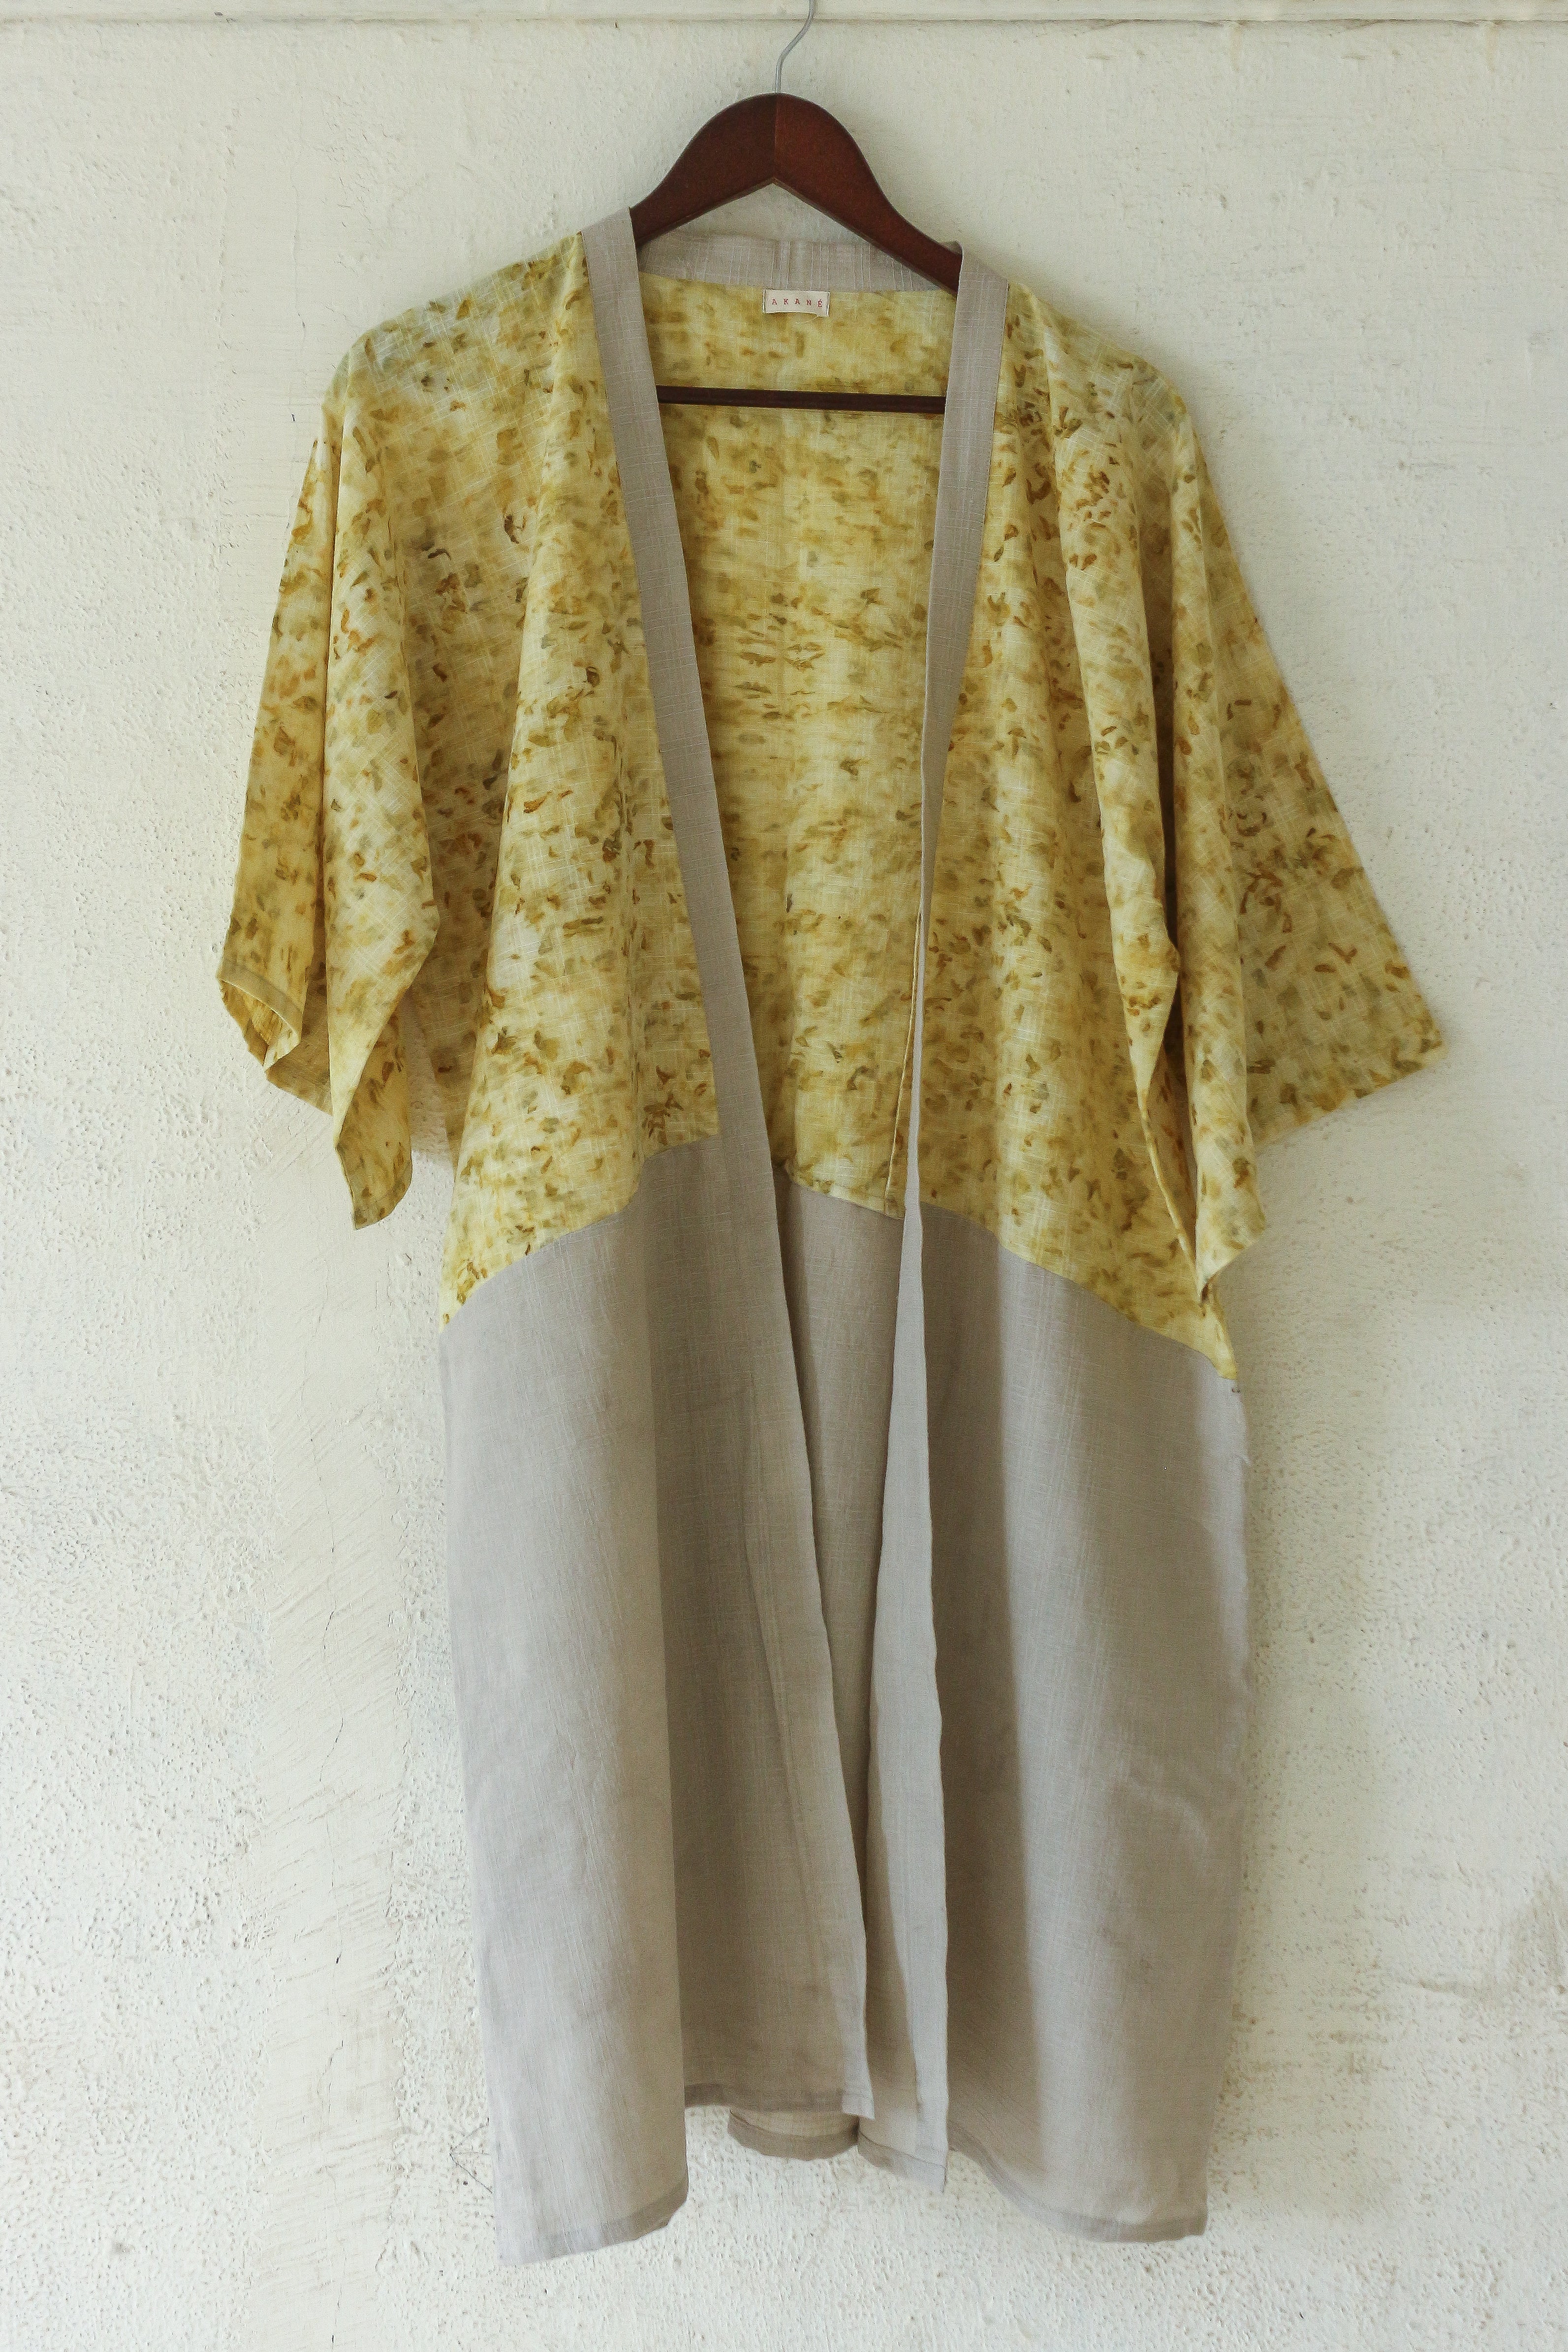 Naturally dyed handwoven cotton kimono